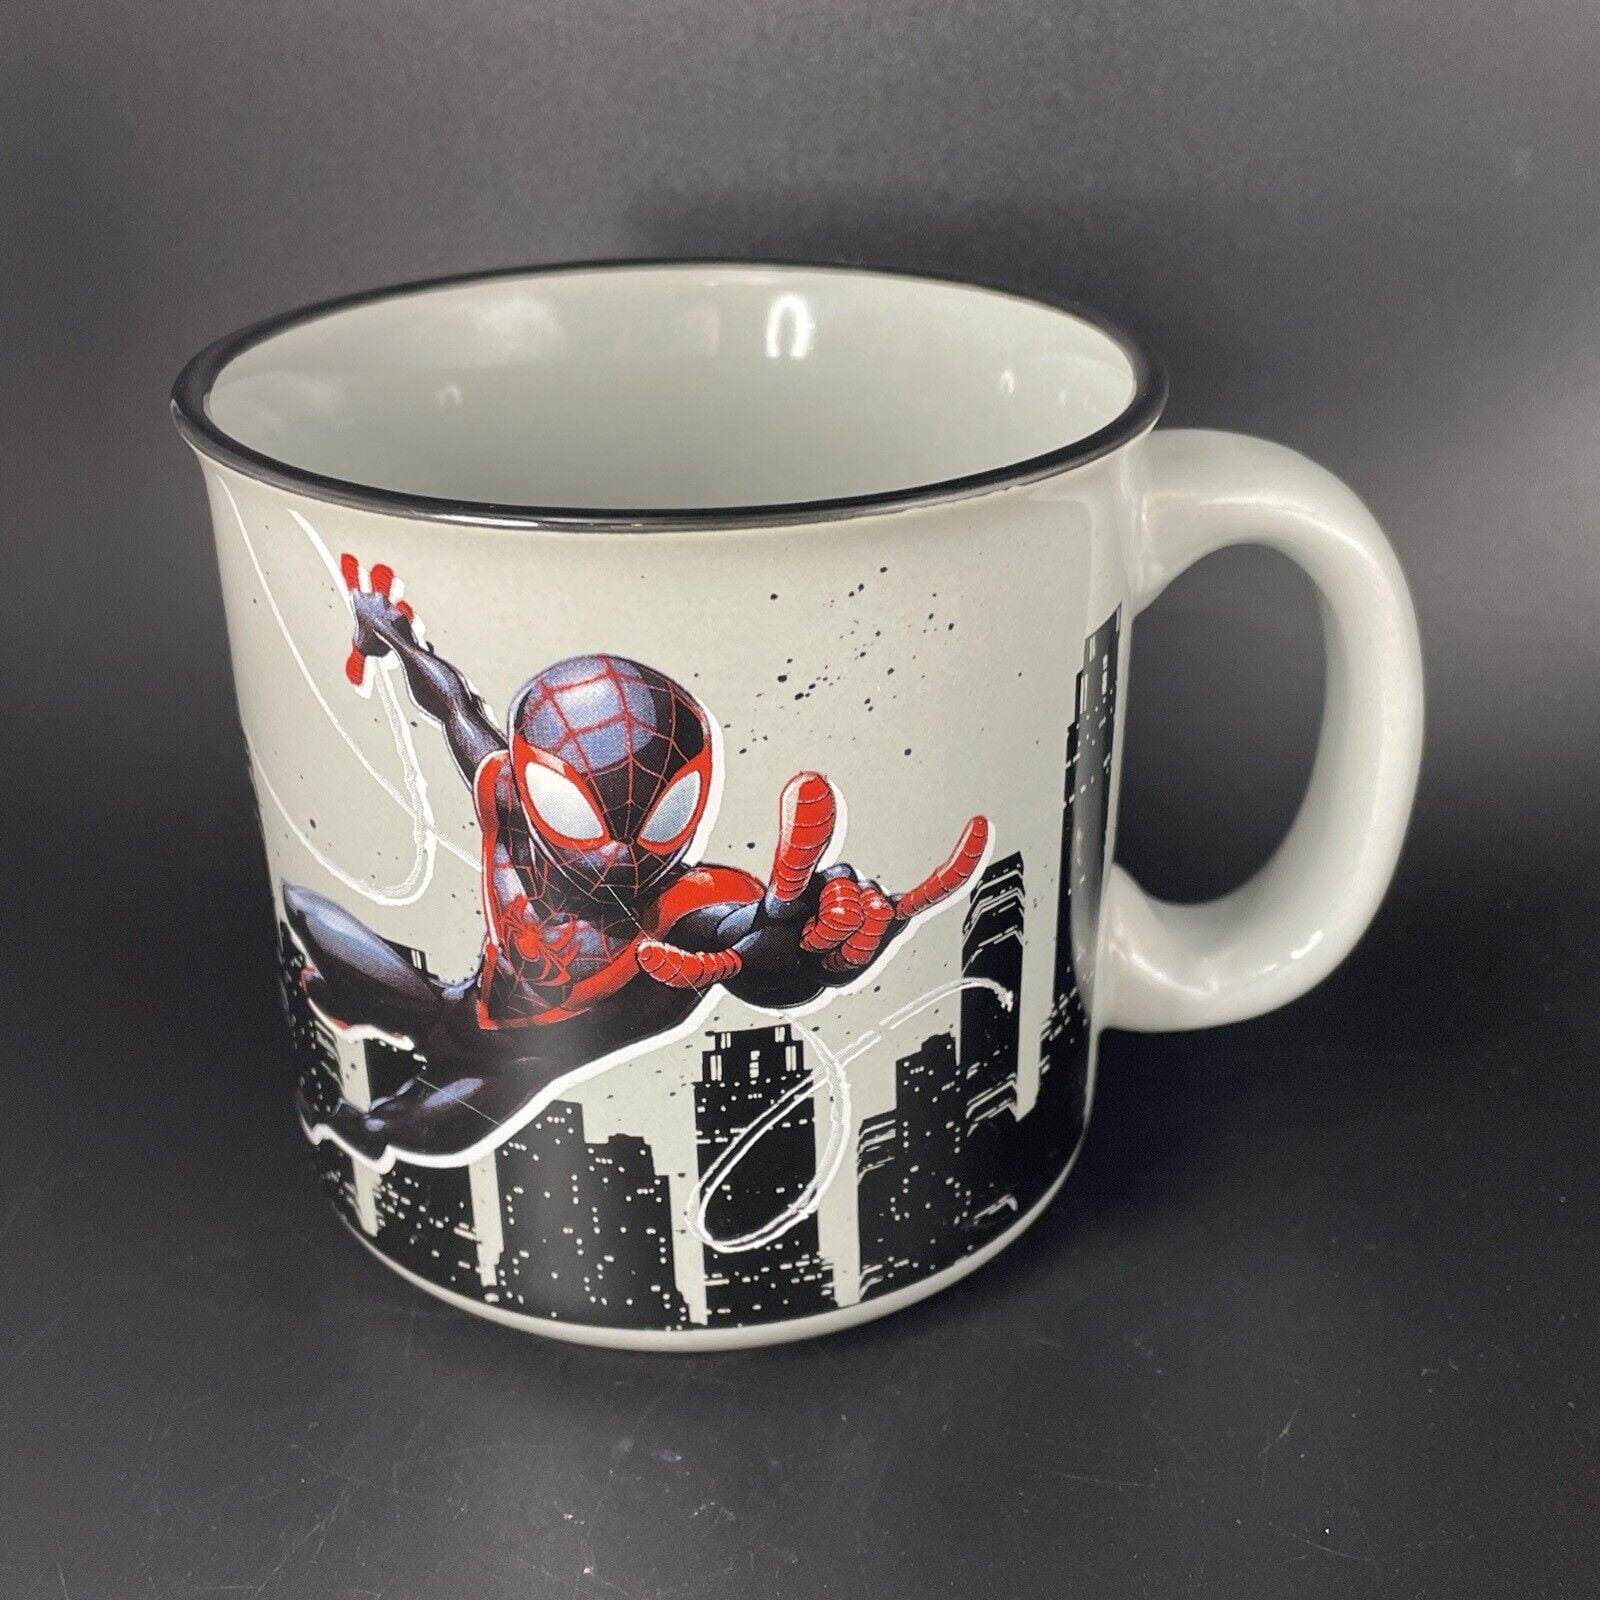 Spider-Man High Above the City Mug, Zazzle